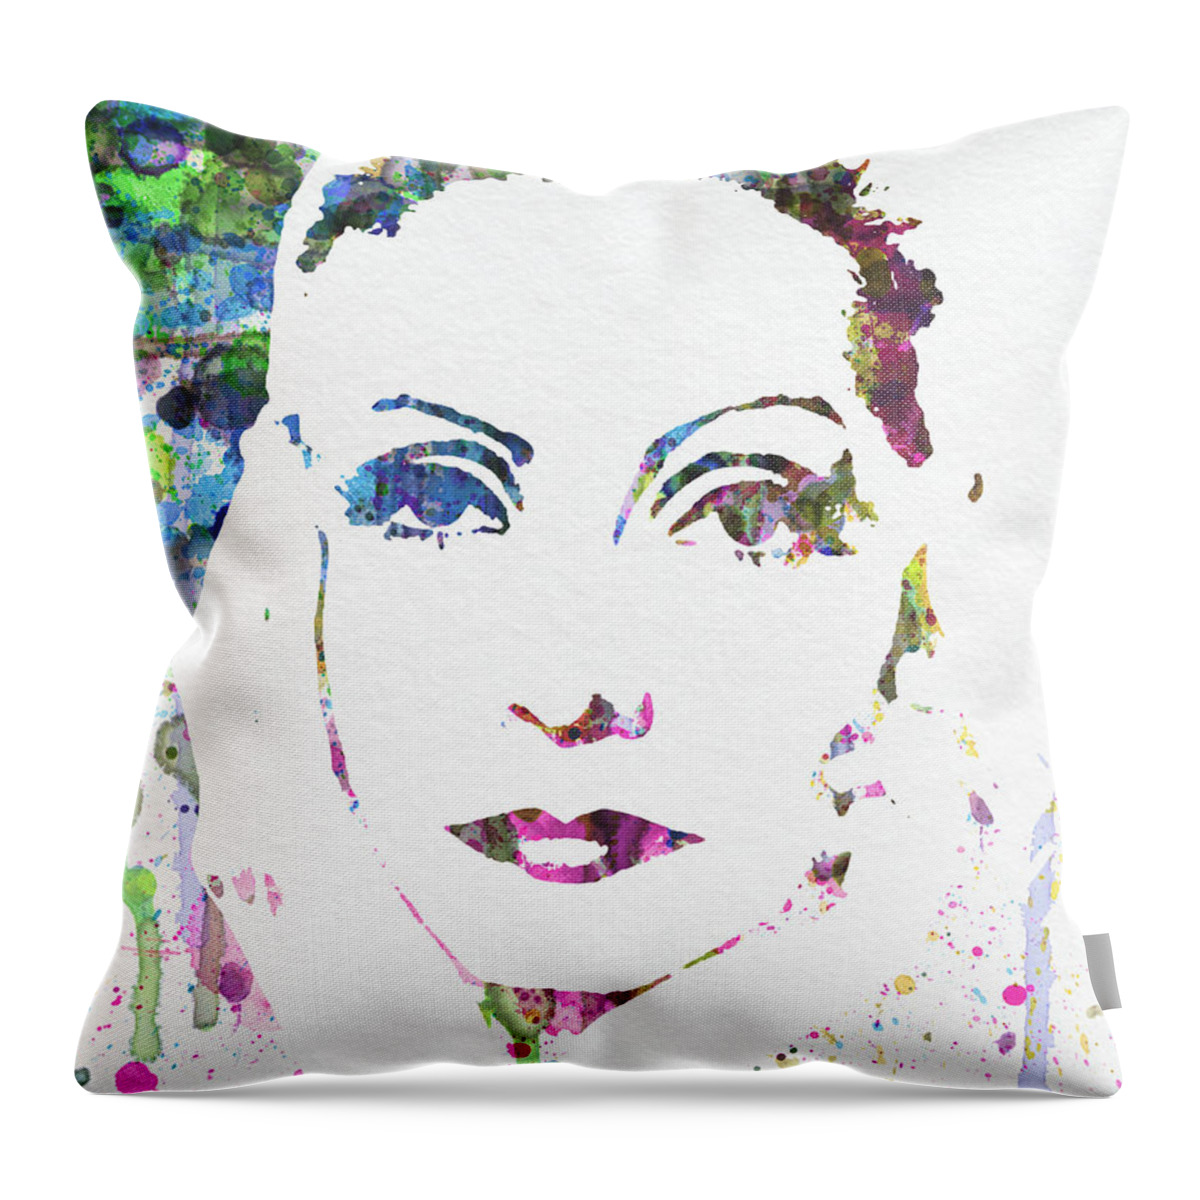 Ingrid Bergman Poster Throw Pillow featuring the digital art Ingrid Bergman by Naxart Studio